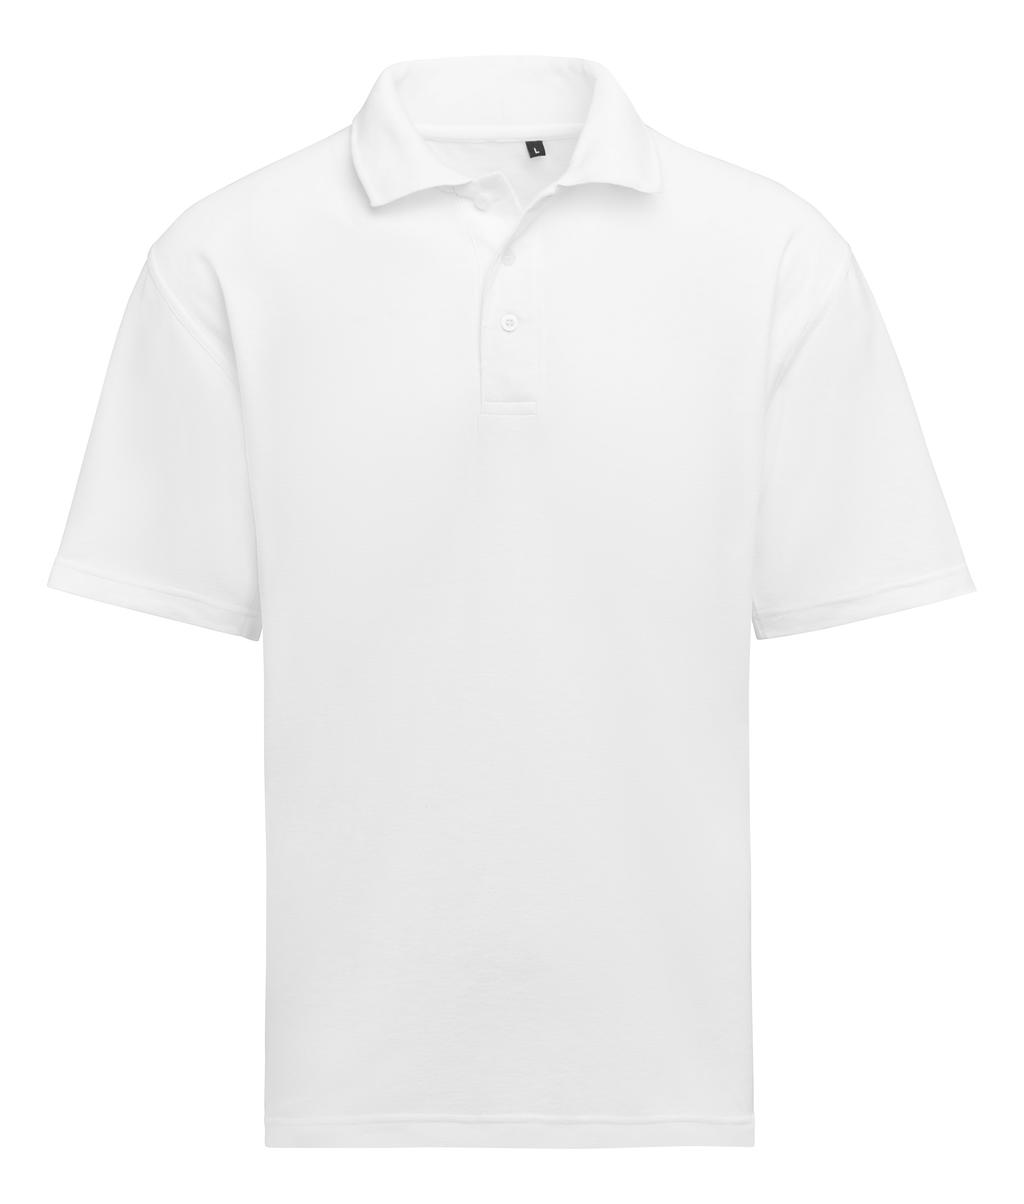  Unisex Polo in Farbe White